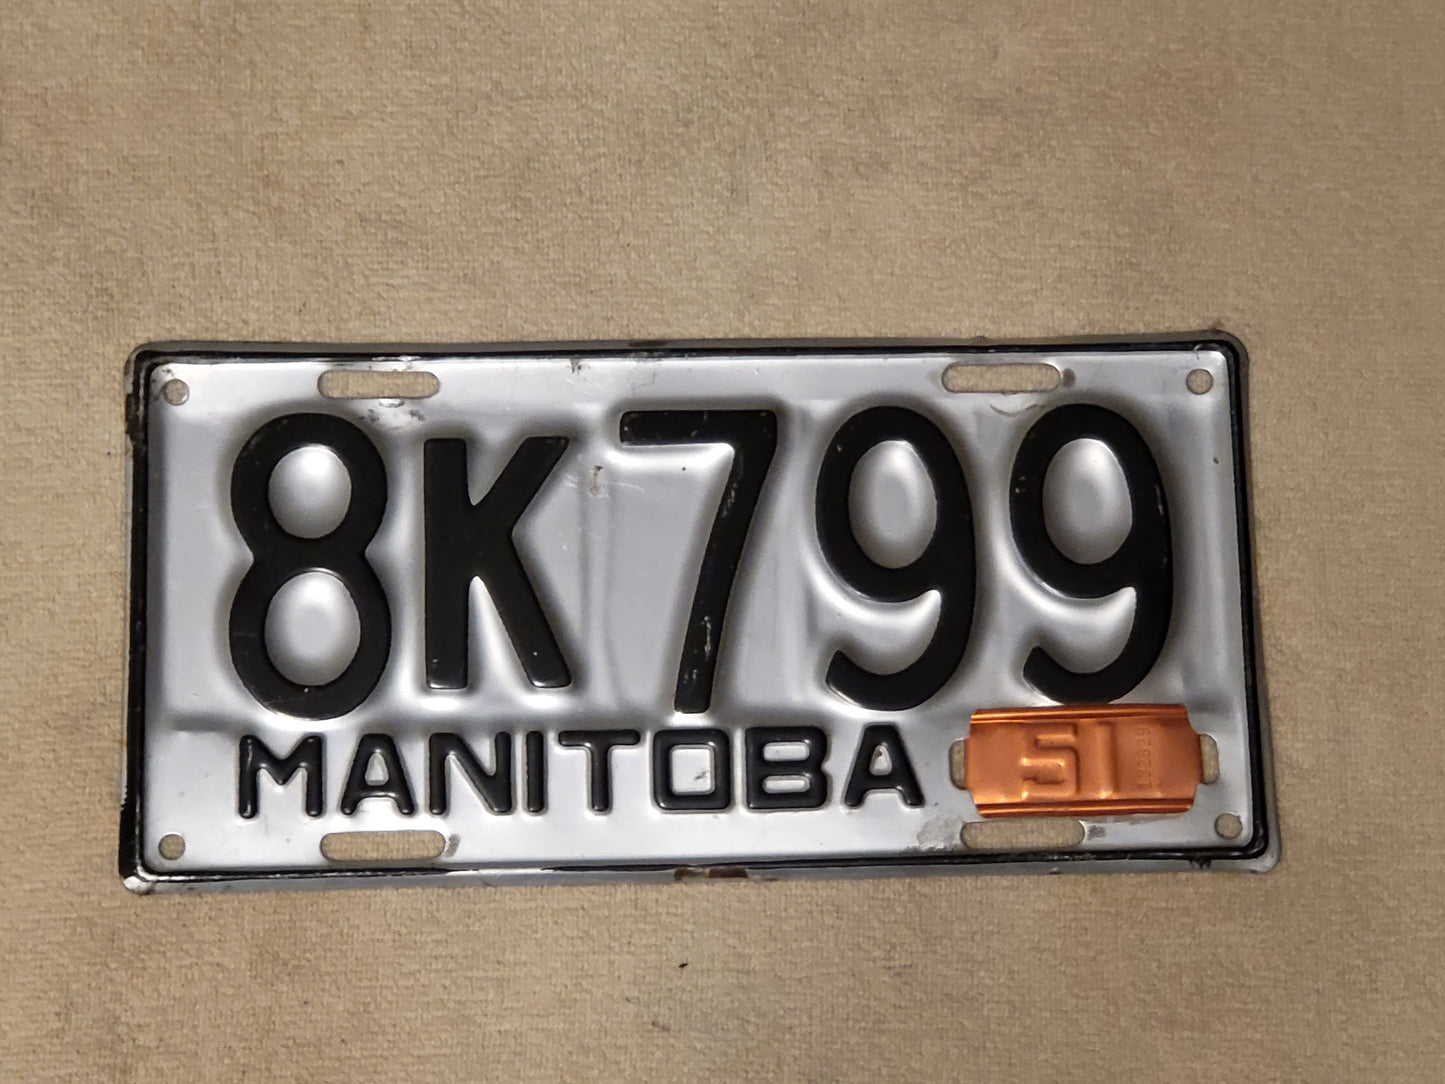 1950 Manitoba Canada License Plate Tag #8K799 w/51 Tab Single Excellent Original